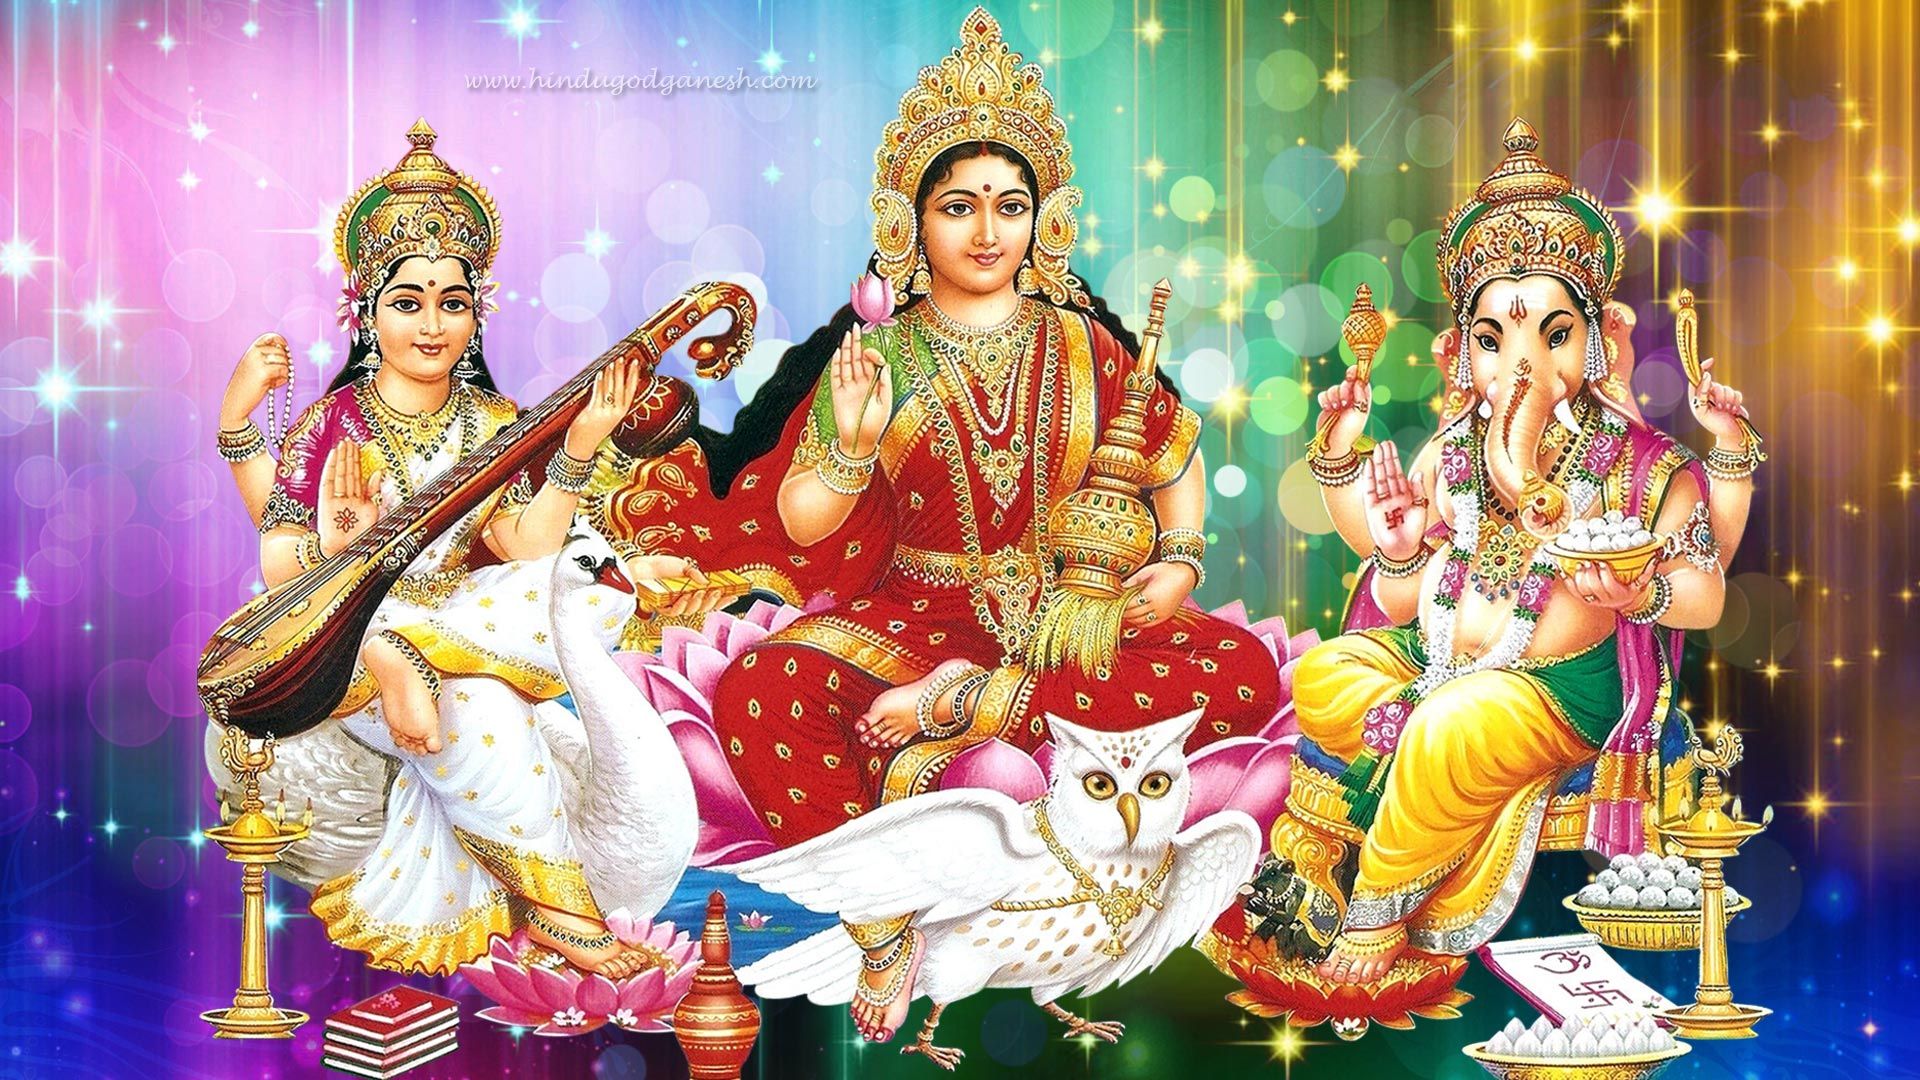 Goddess Lakshmi Image & HD Wallpaper Free Download